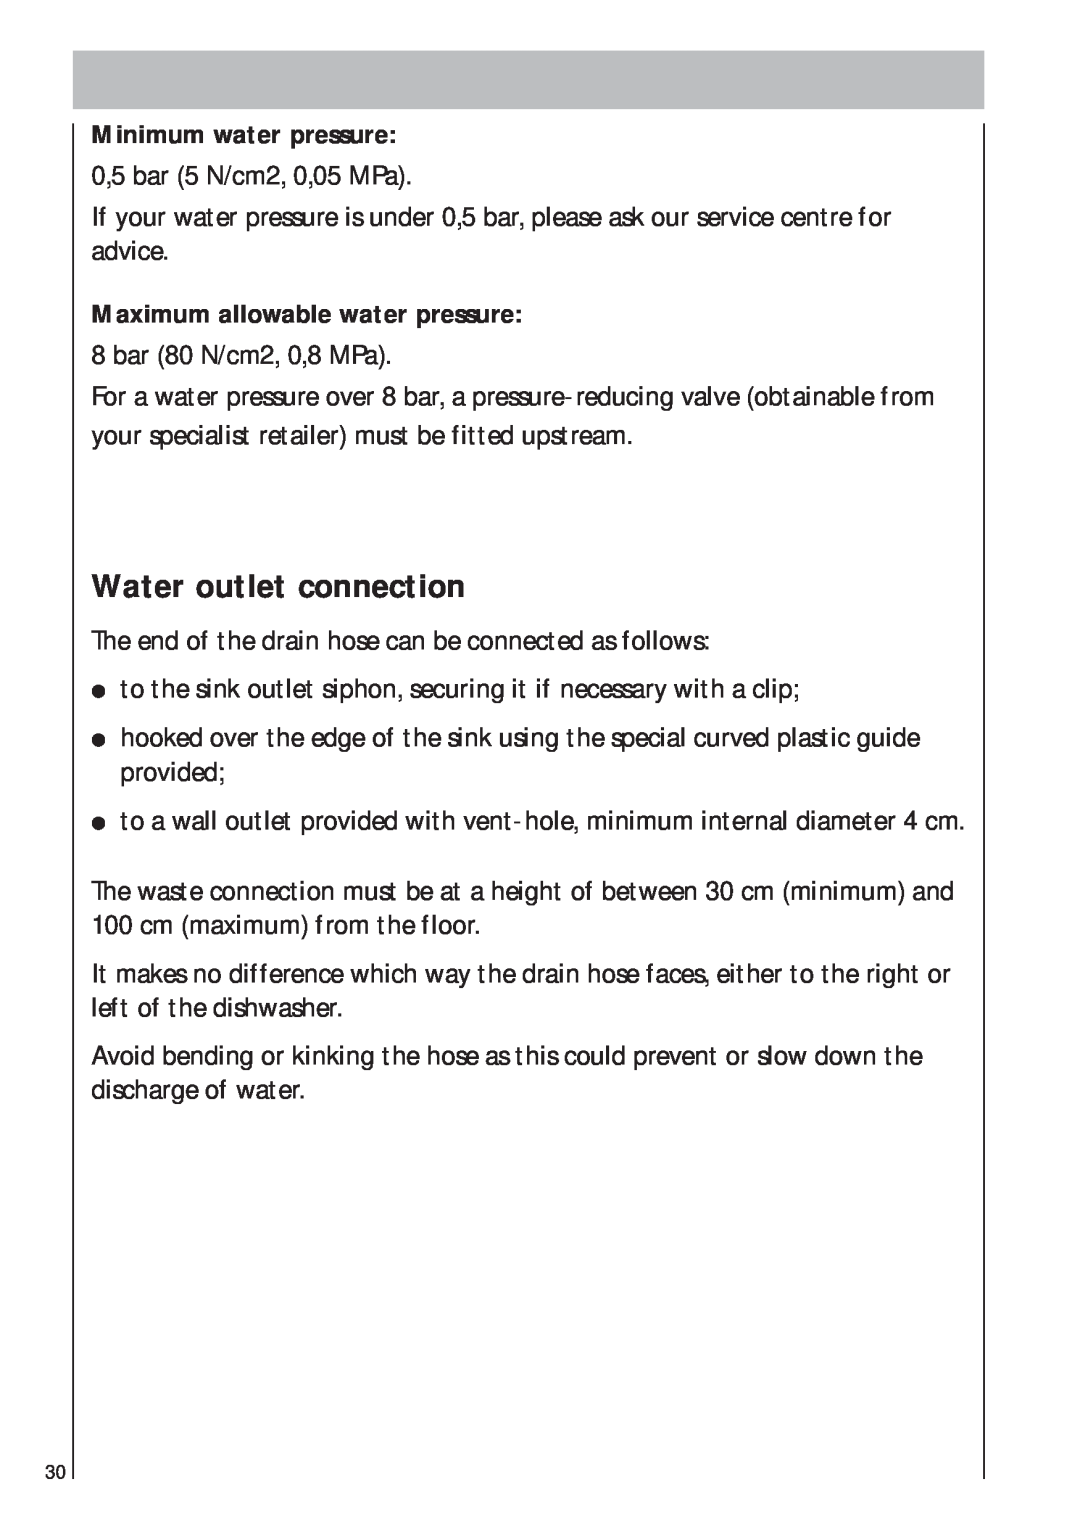 AEG 403 manual Water outlet connection, Minimum water pressure, Maximum allowable water pressure 